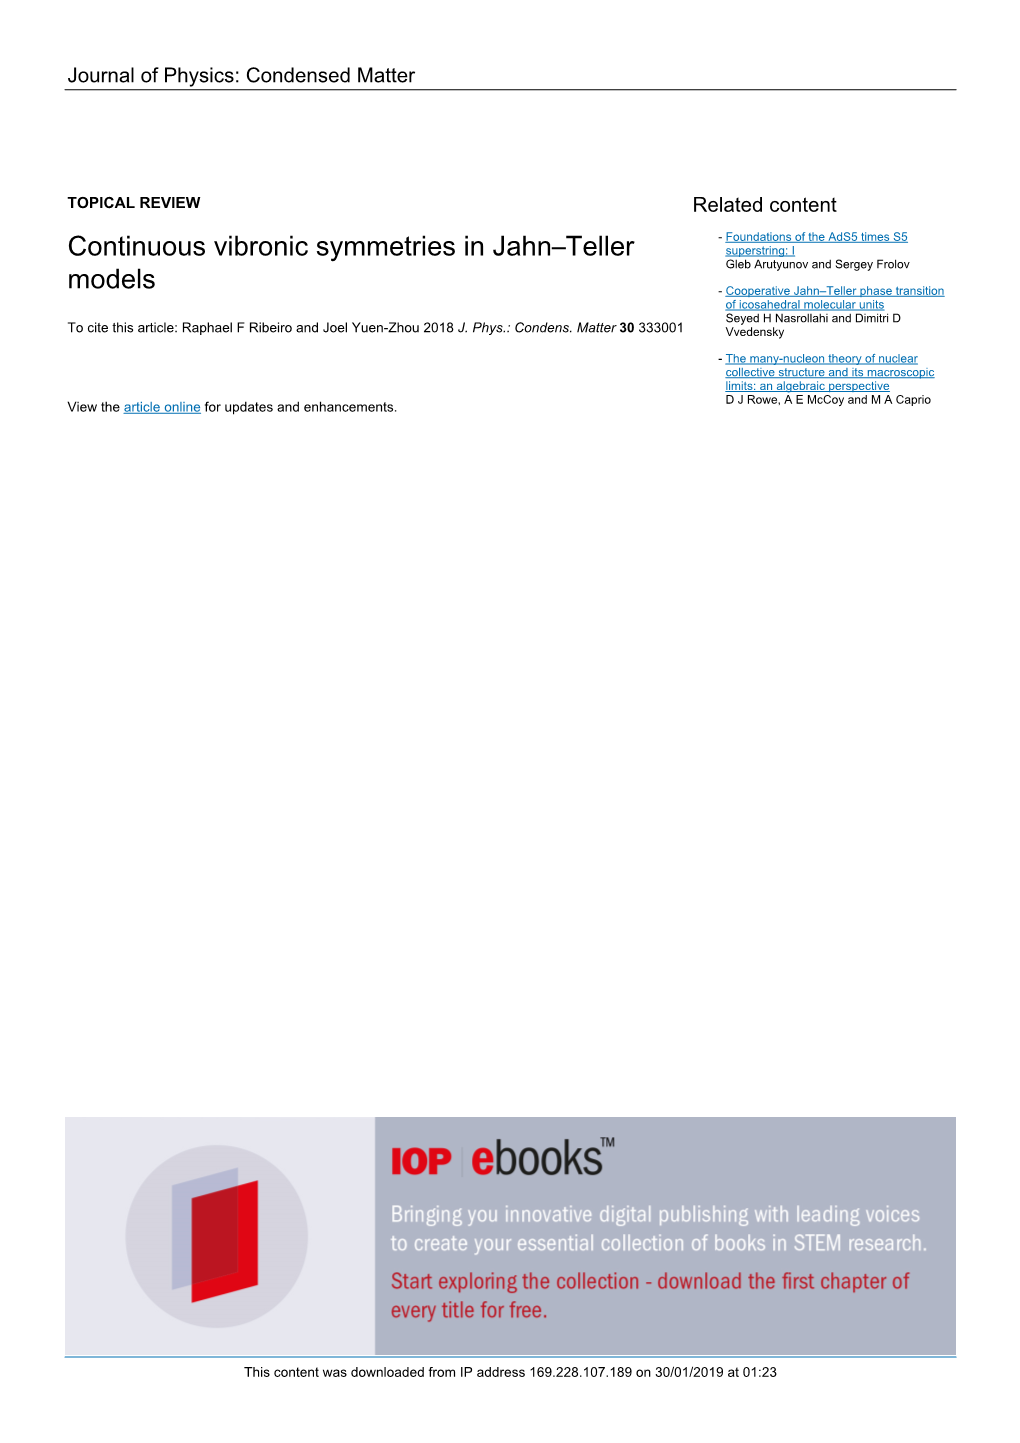 Continuous Vibronic Symmetries in Jahn–Teller Models